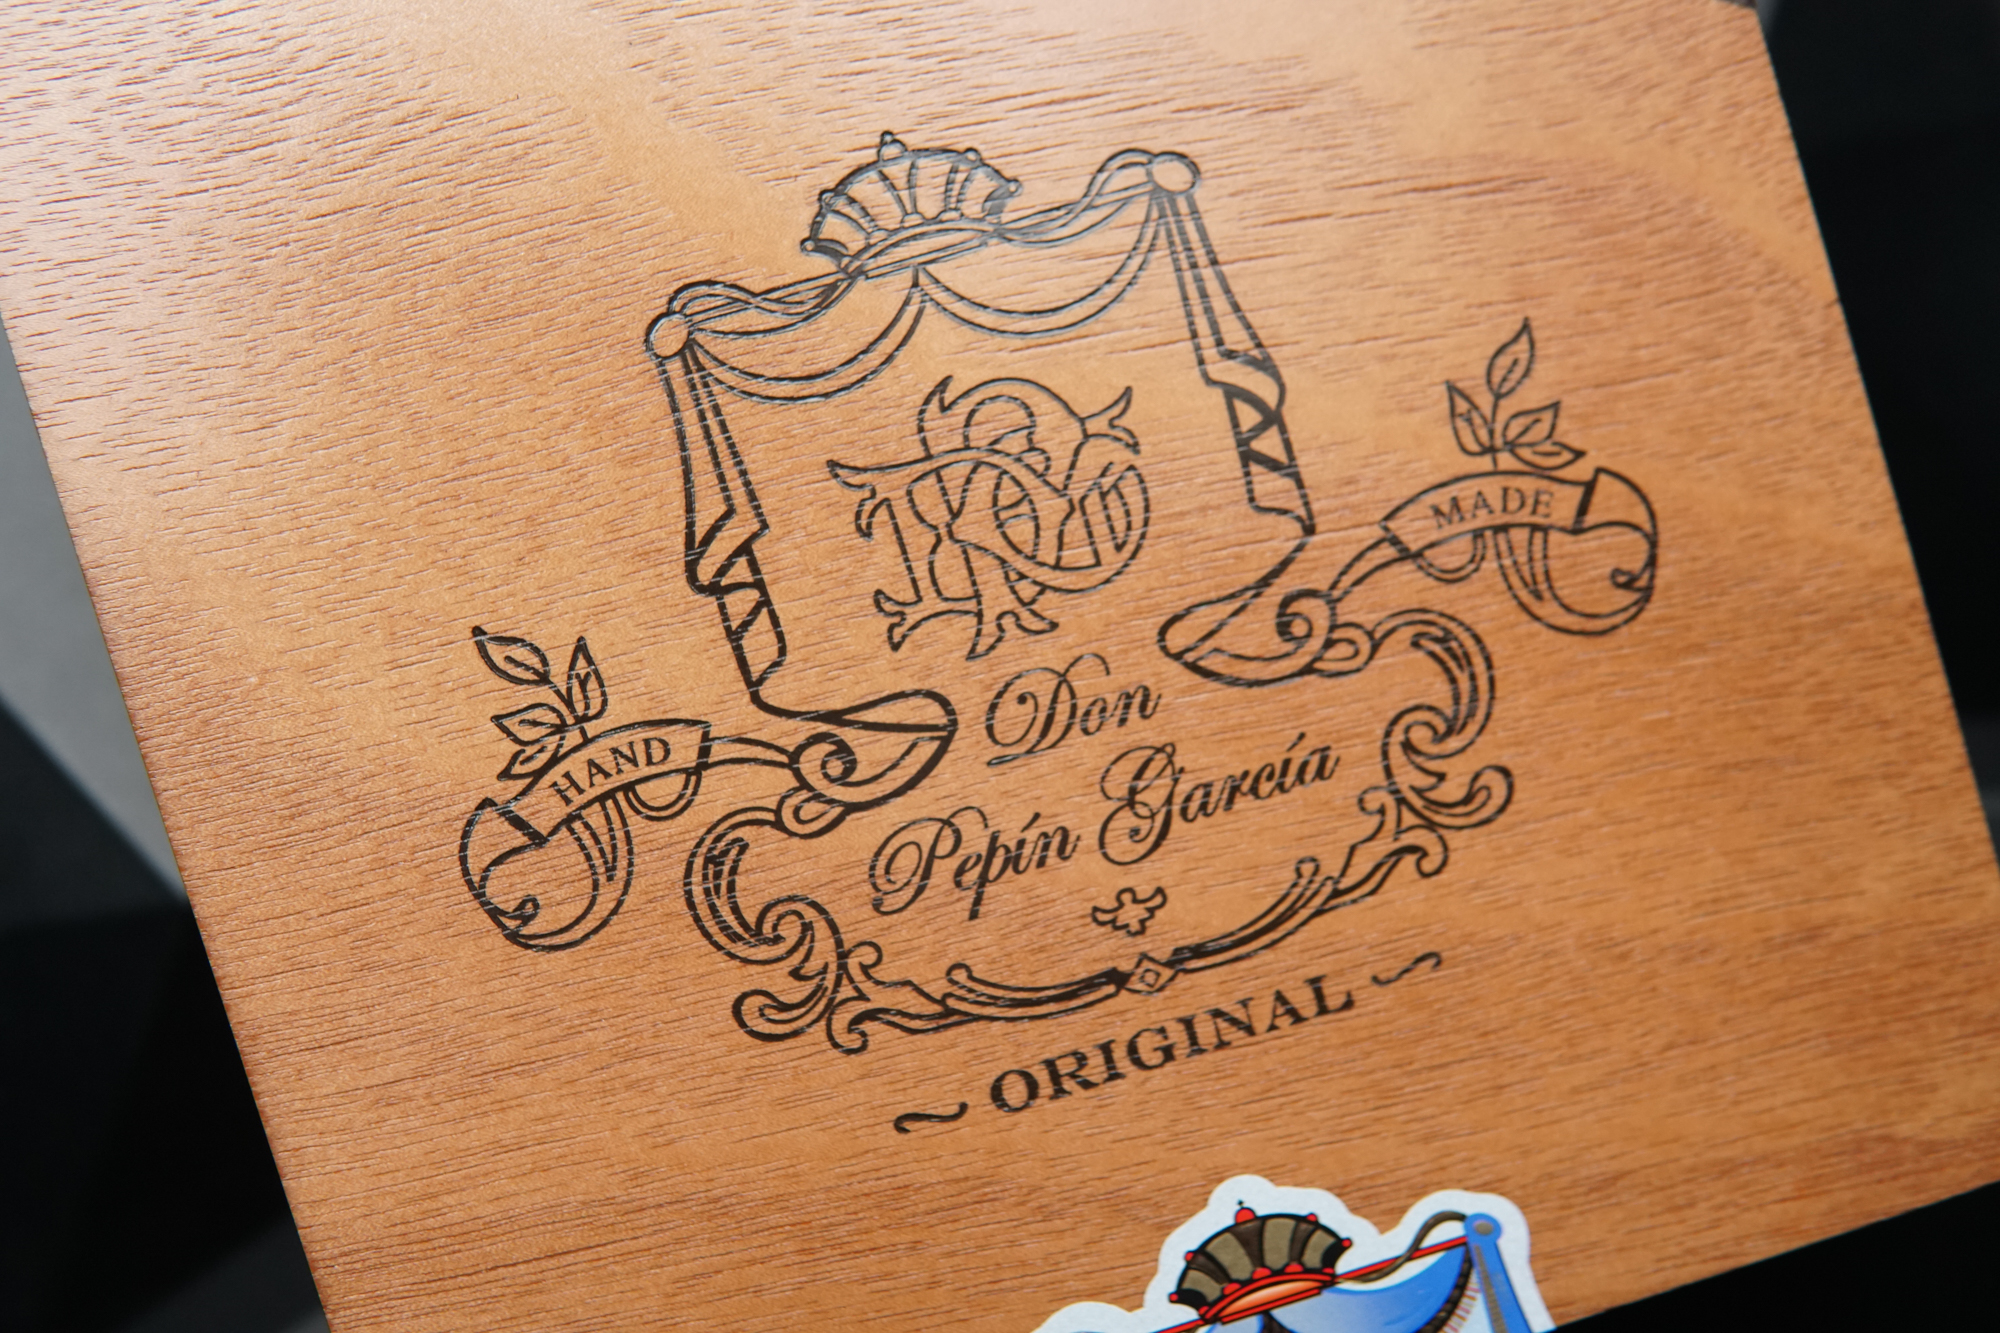 Don Pepin Garcia Orignal cigar box